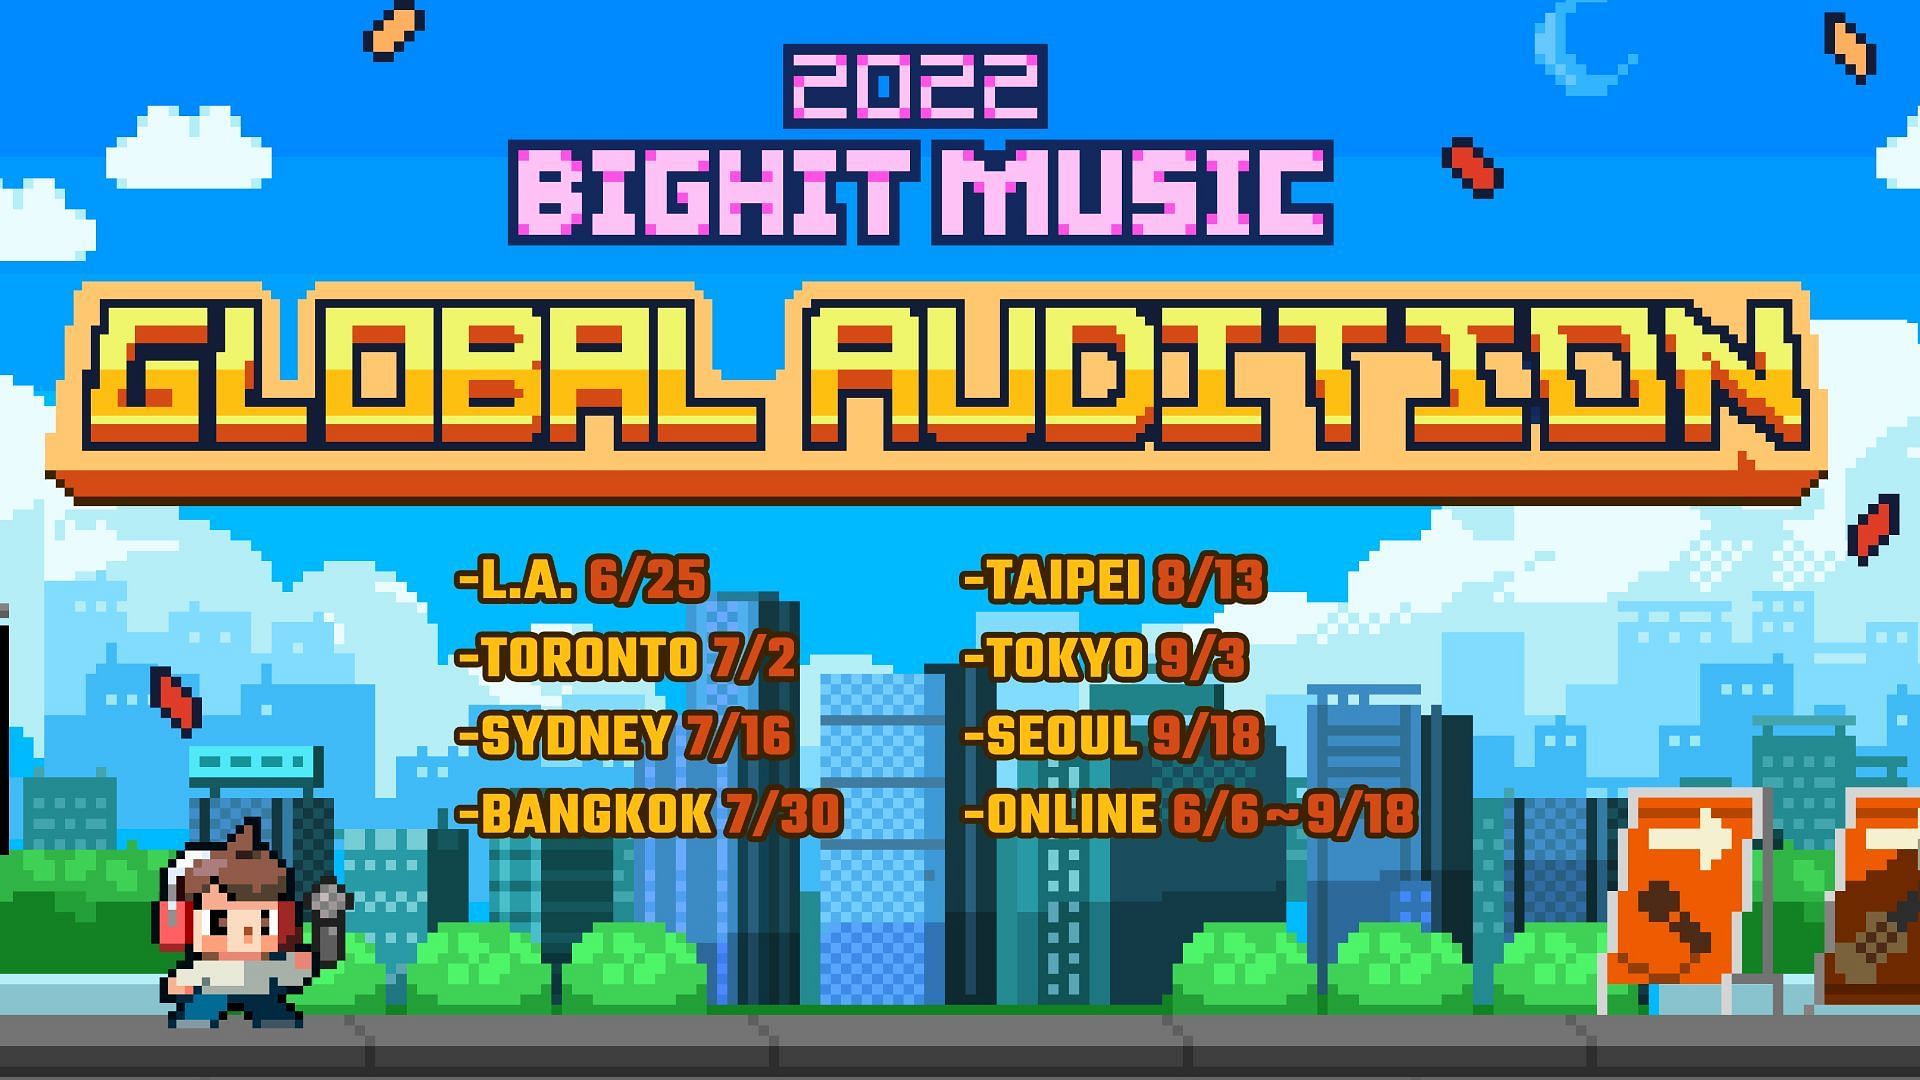 BIG HIT MUSIC global audition (Image via BIG HIT MUSIC)